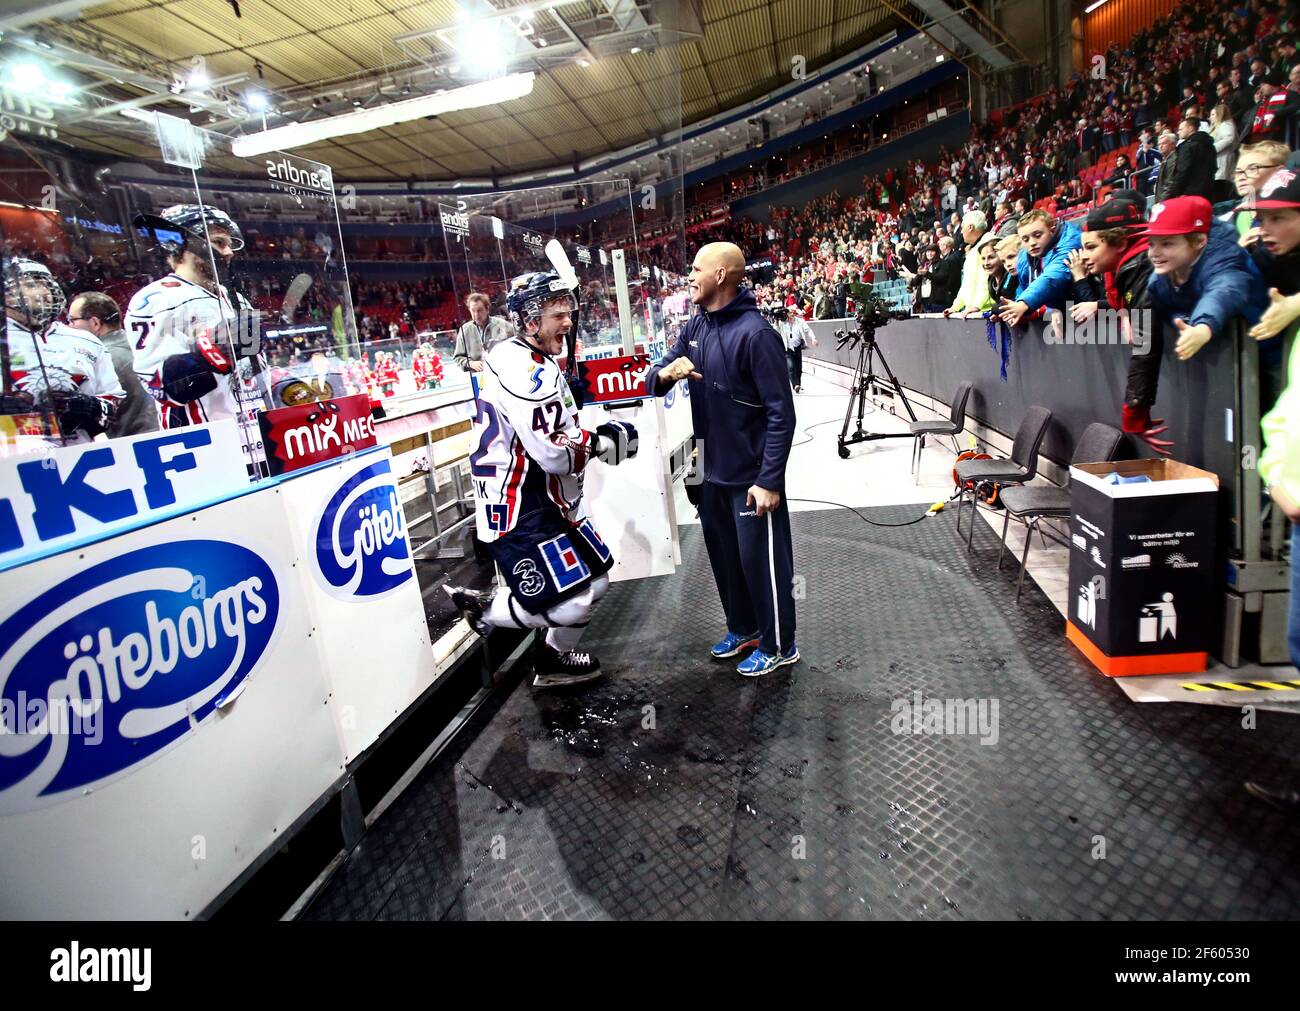 No. 42 Chad Kolarik, Linköping hockey club Stock Photo - Alamy